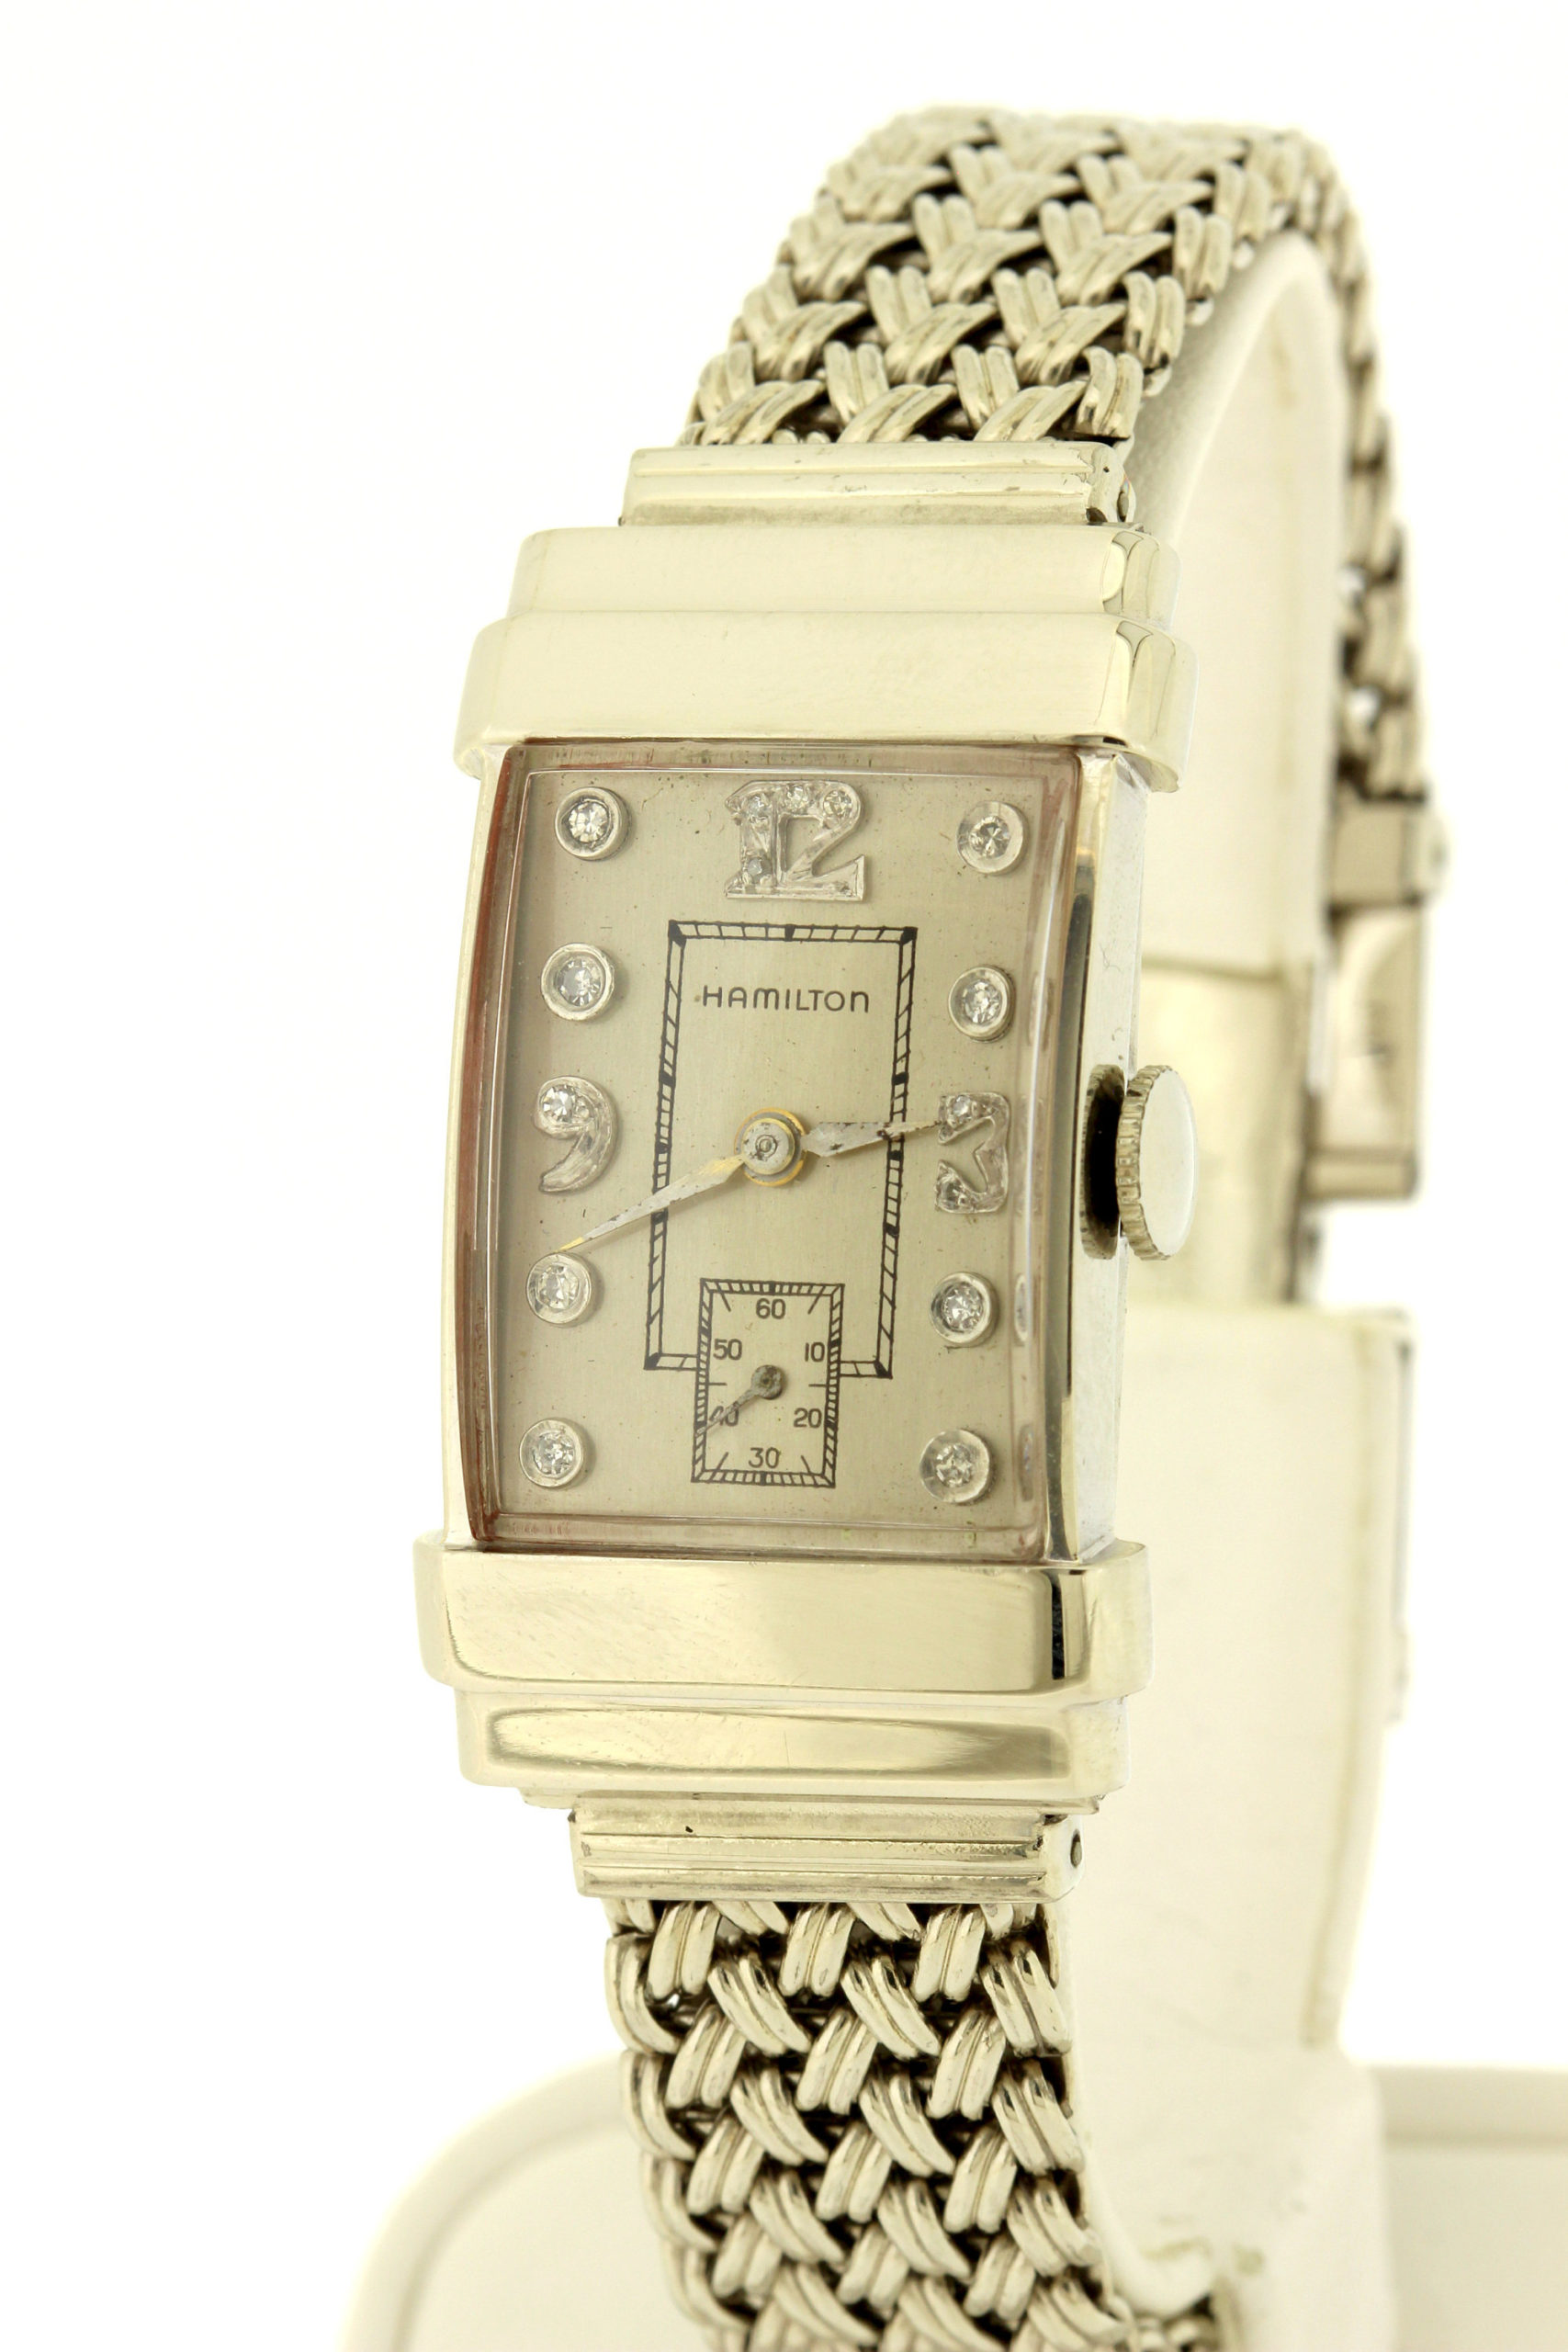 14k White Gold Vintage Ladies Hamilton Watch. Nice Diamonds.